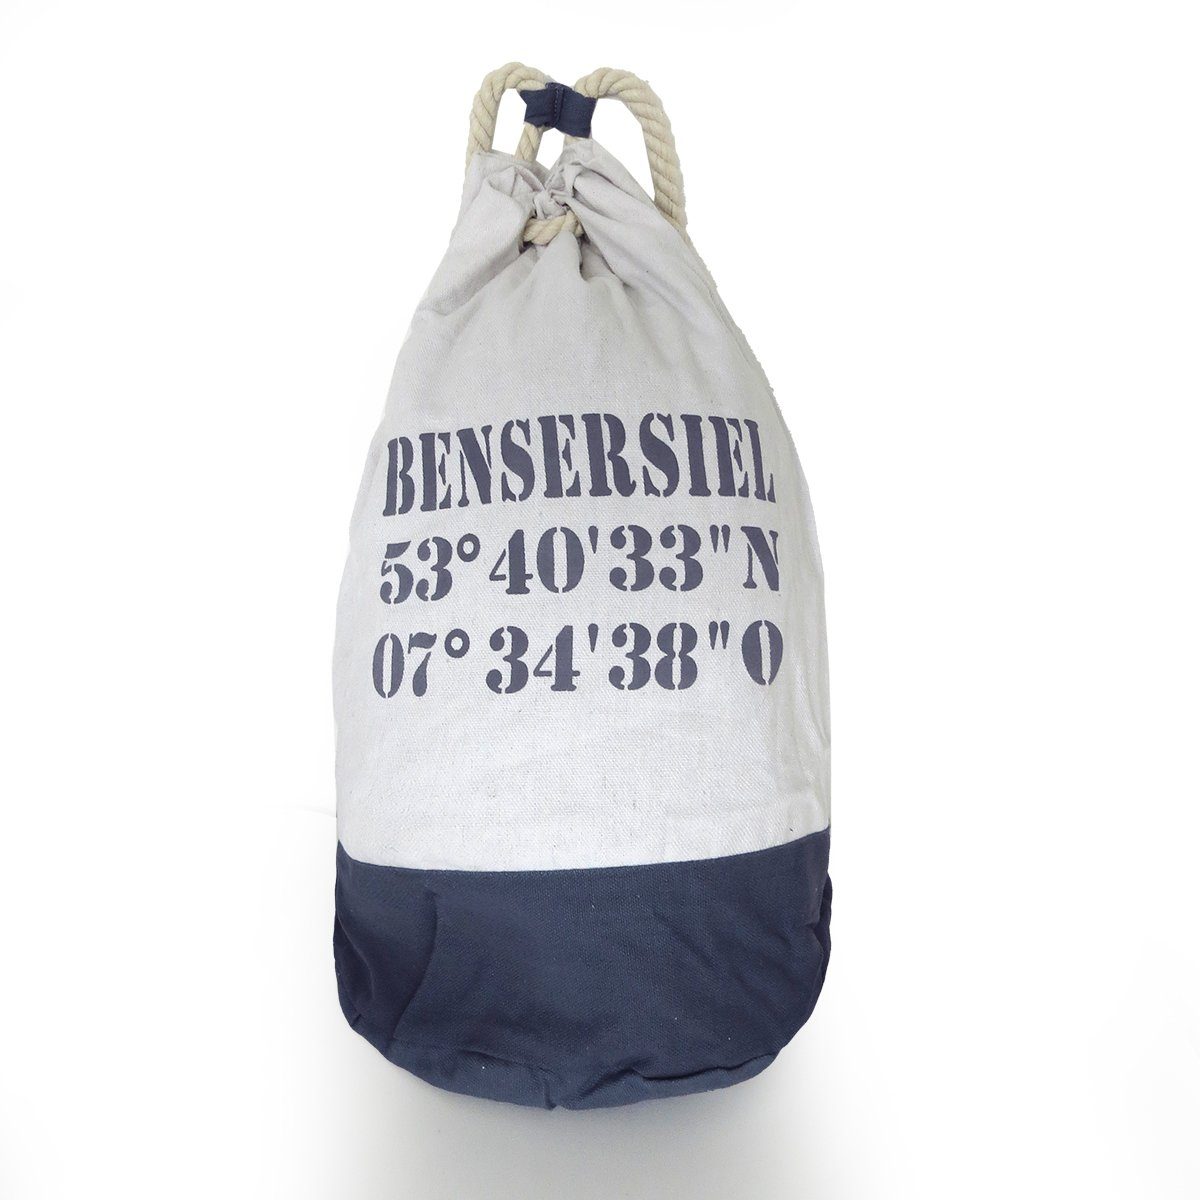 Sonia Originelli Umhängetasche XL Seesack "Bensersiel" Marinesack Bag Maritim